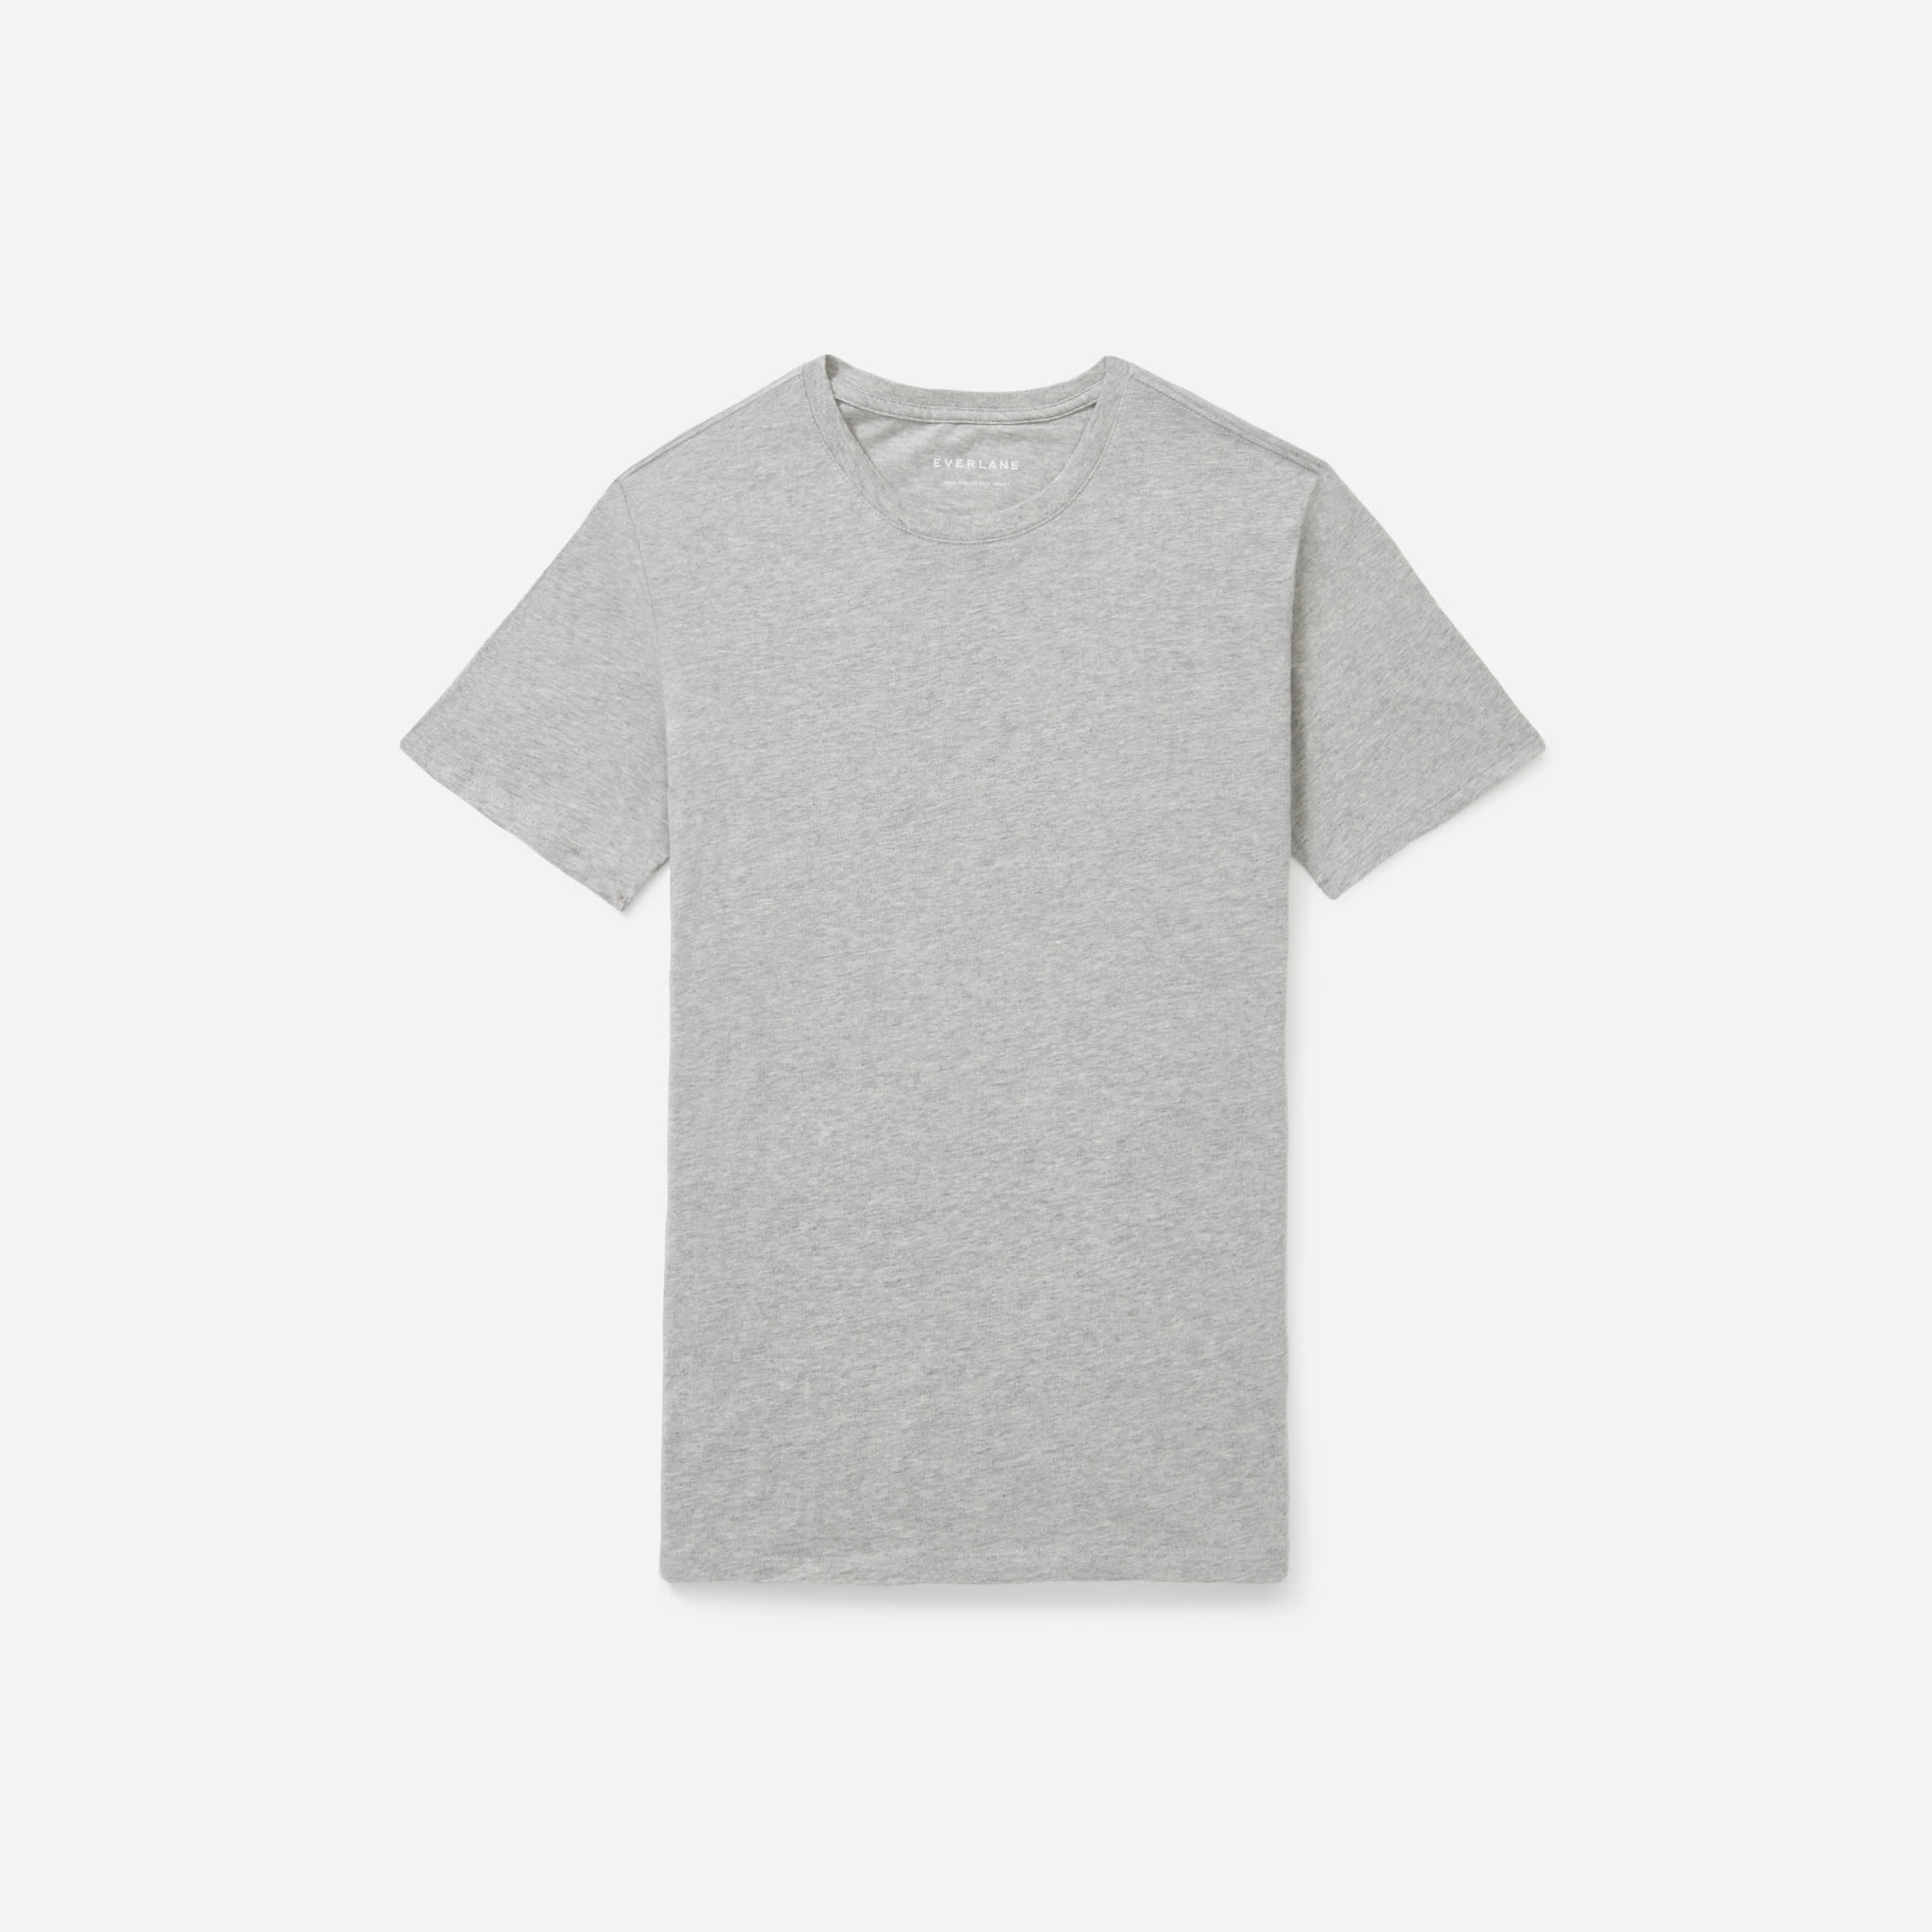 heather gray t shirt